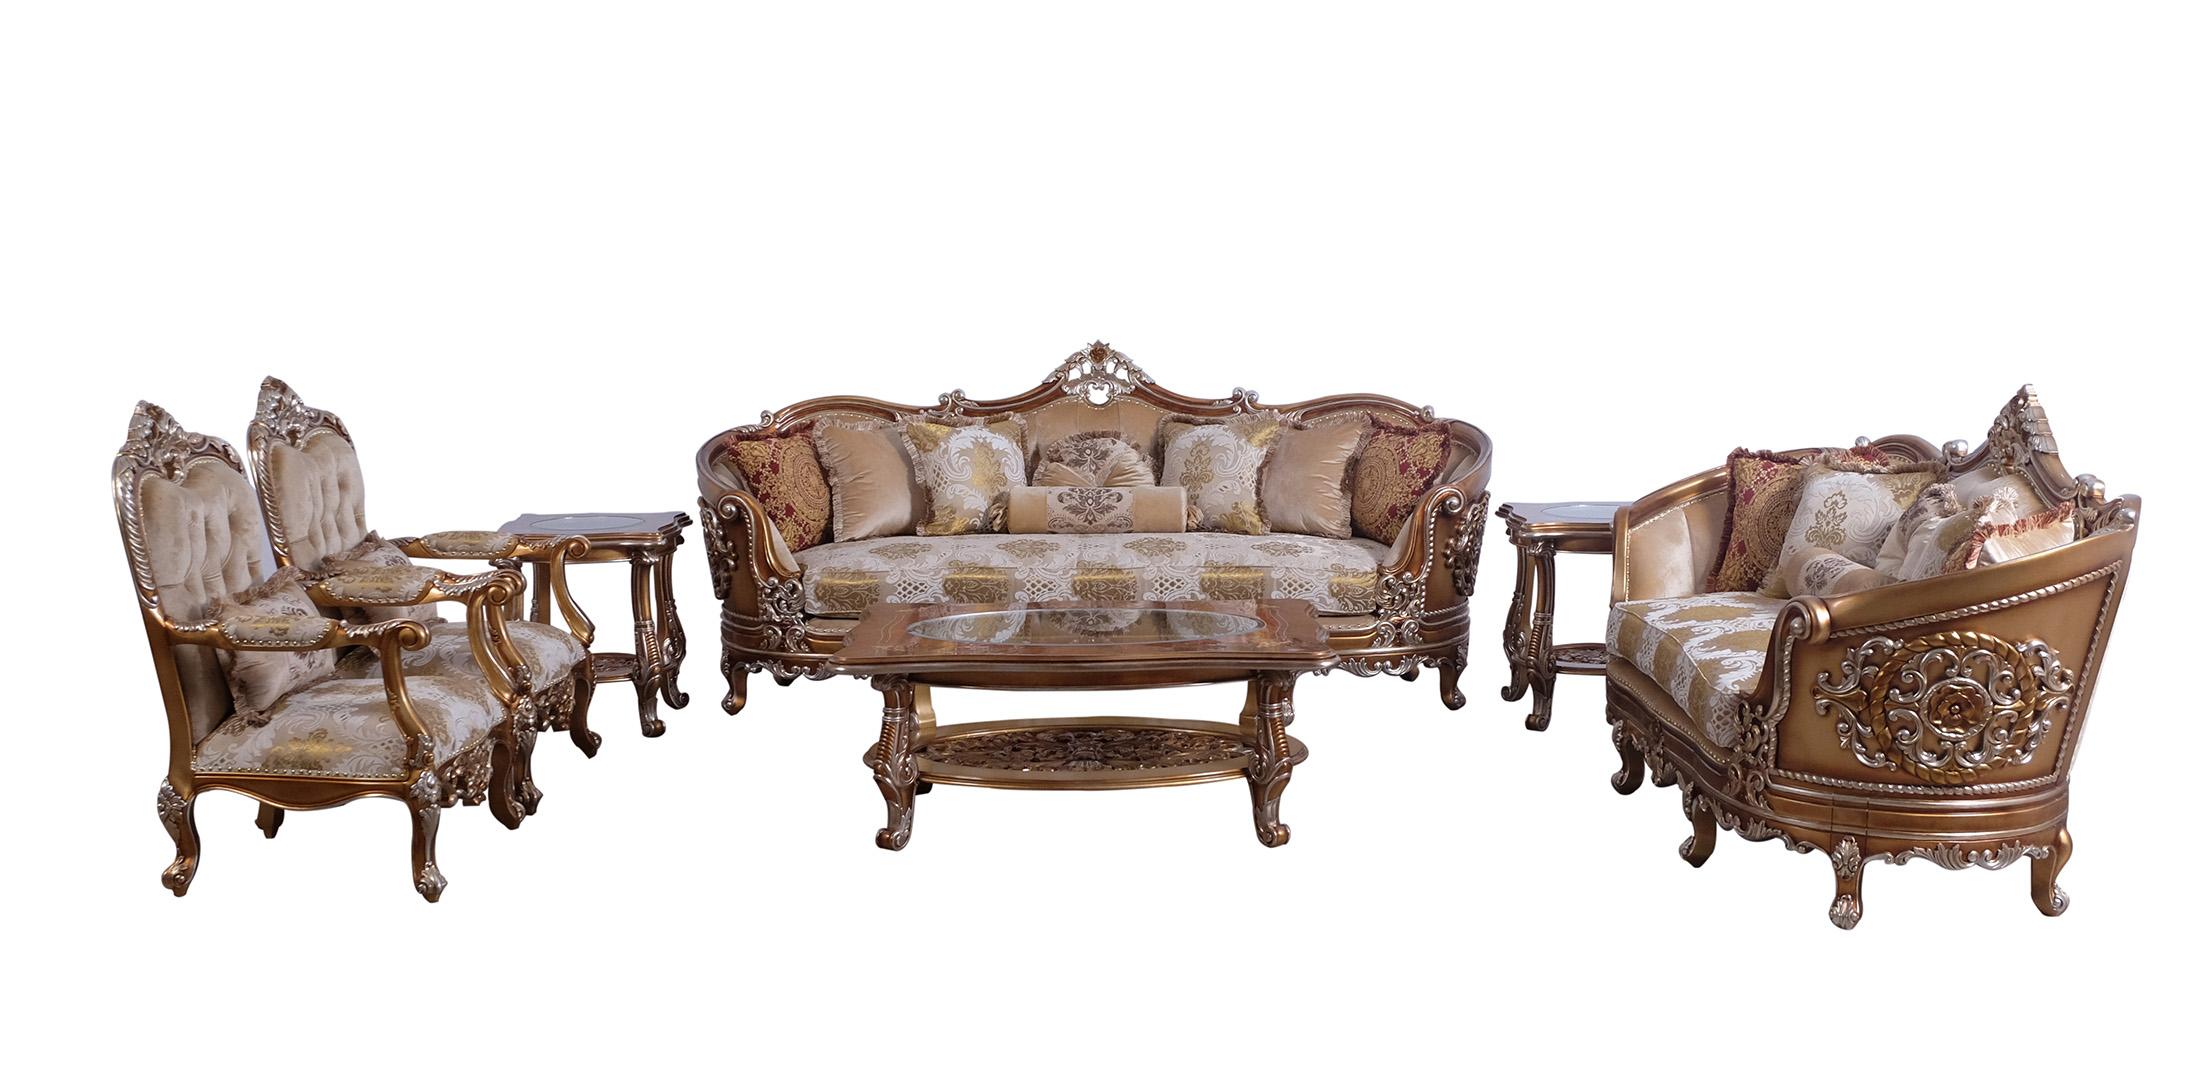 Classic, Traditional Sofa Set SAINT GERMAIN 35550-Set-4 in Sand, Gold Fabric